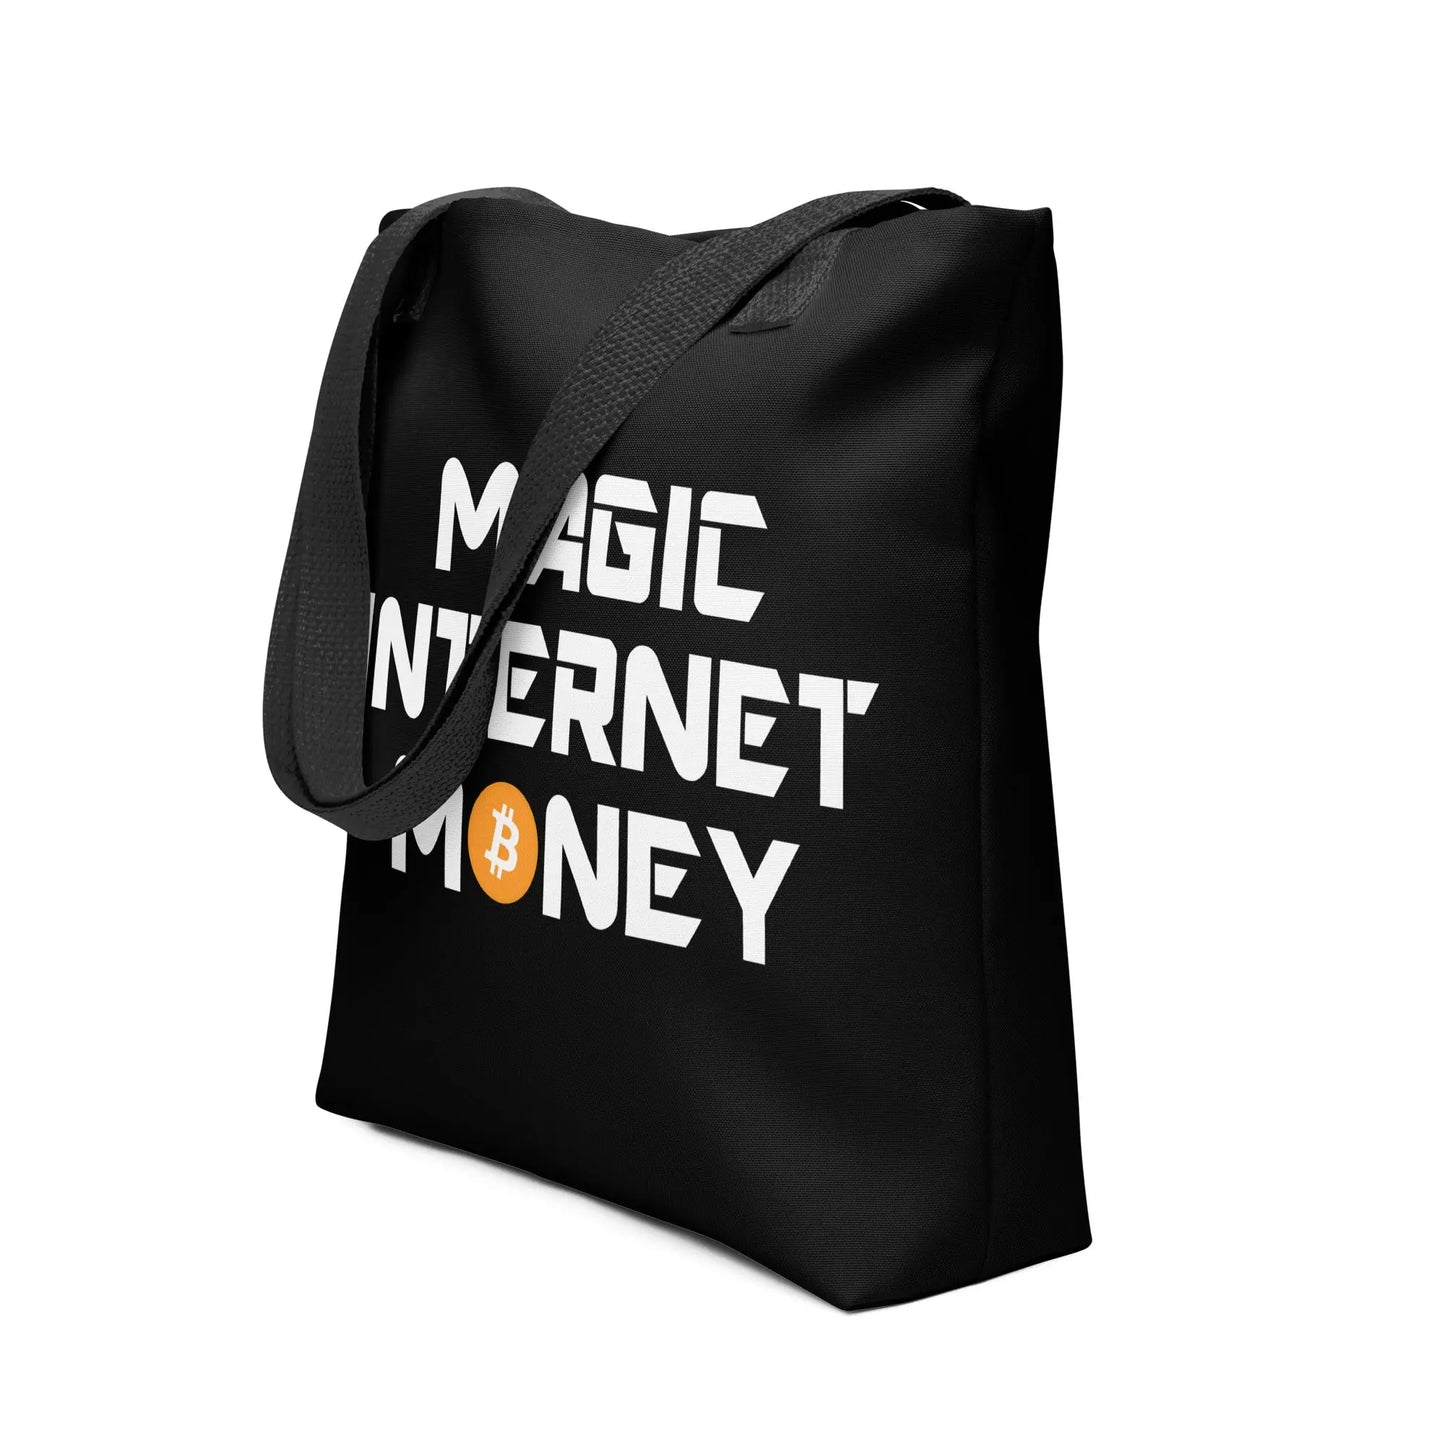 Magic Internet Money - Bitcoin Tote Bag